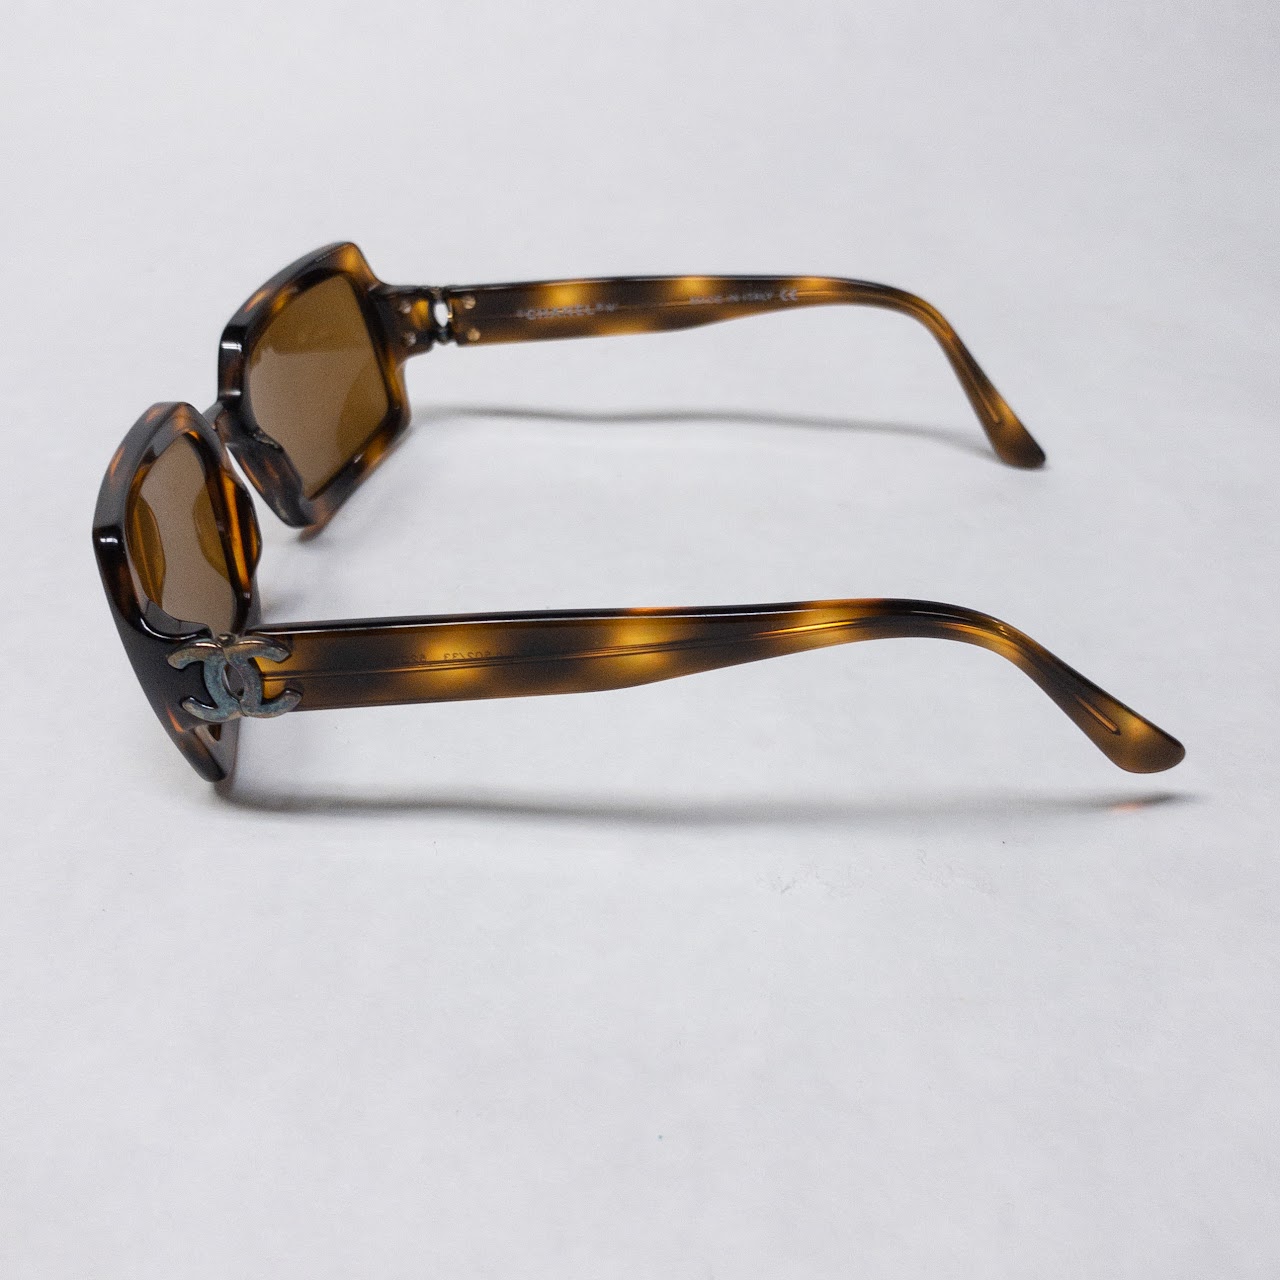 Chanel Tortiseshell Sunglasses